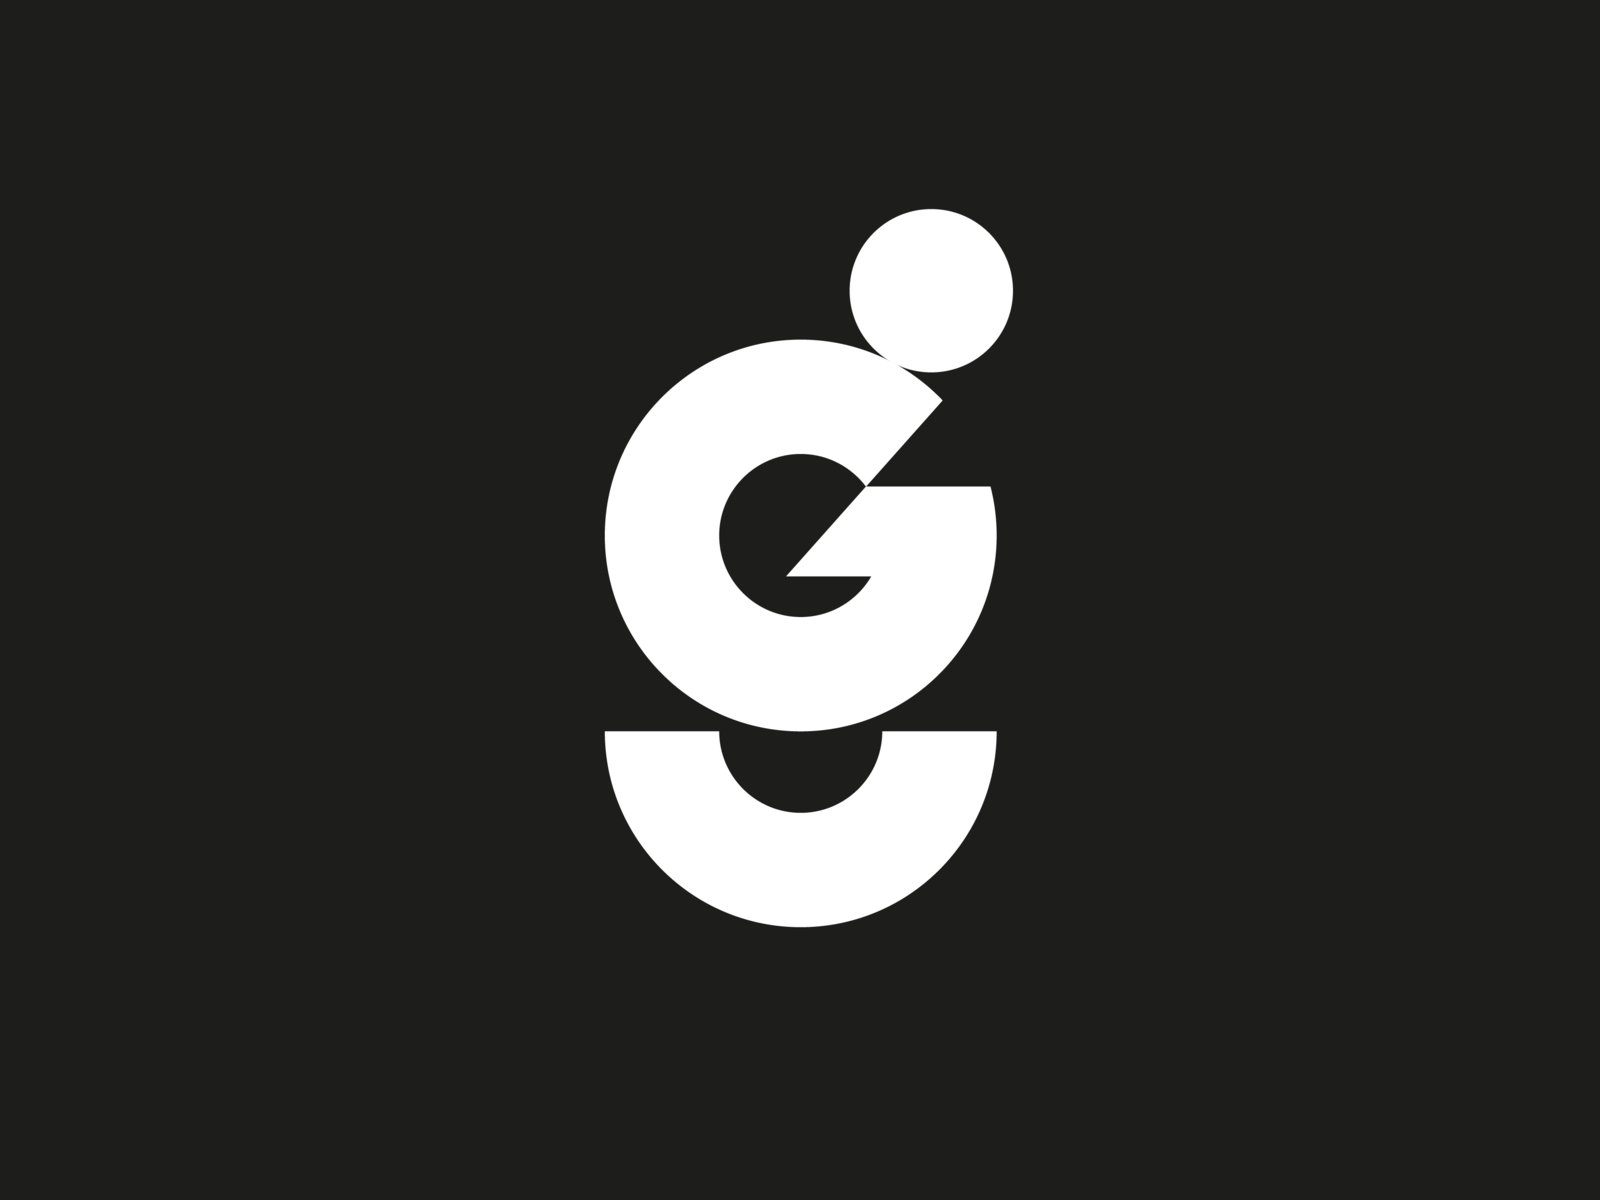 double g logo ideas 2